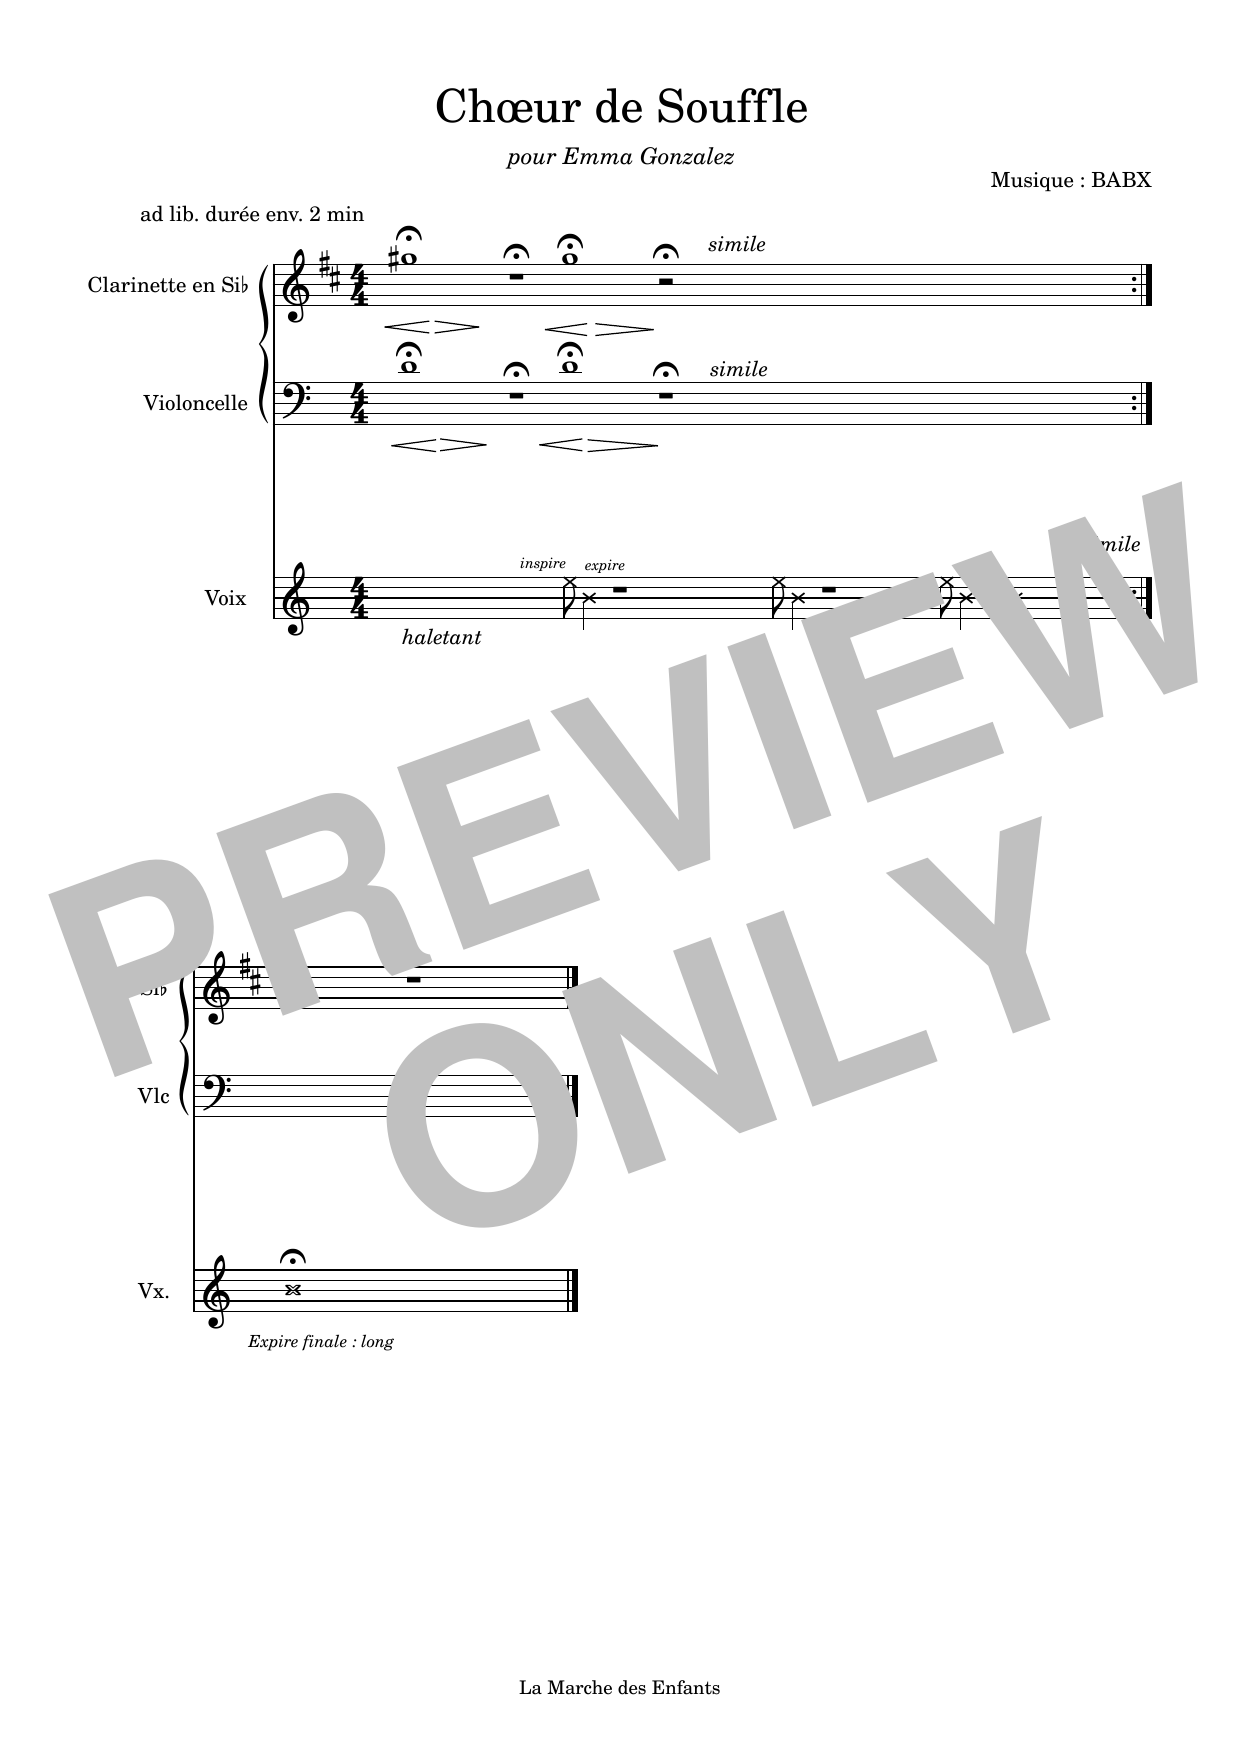 David Babin (Babx) Choeur De Souffle sheet music notes printable PDF score